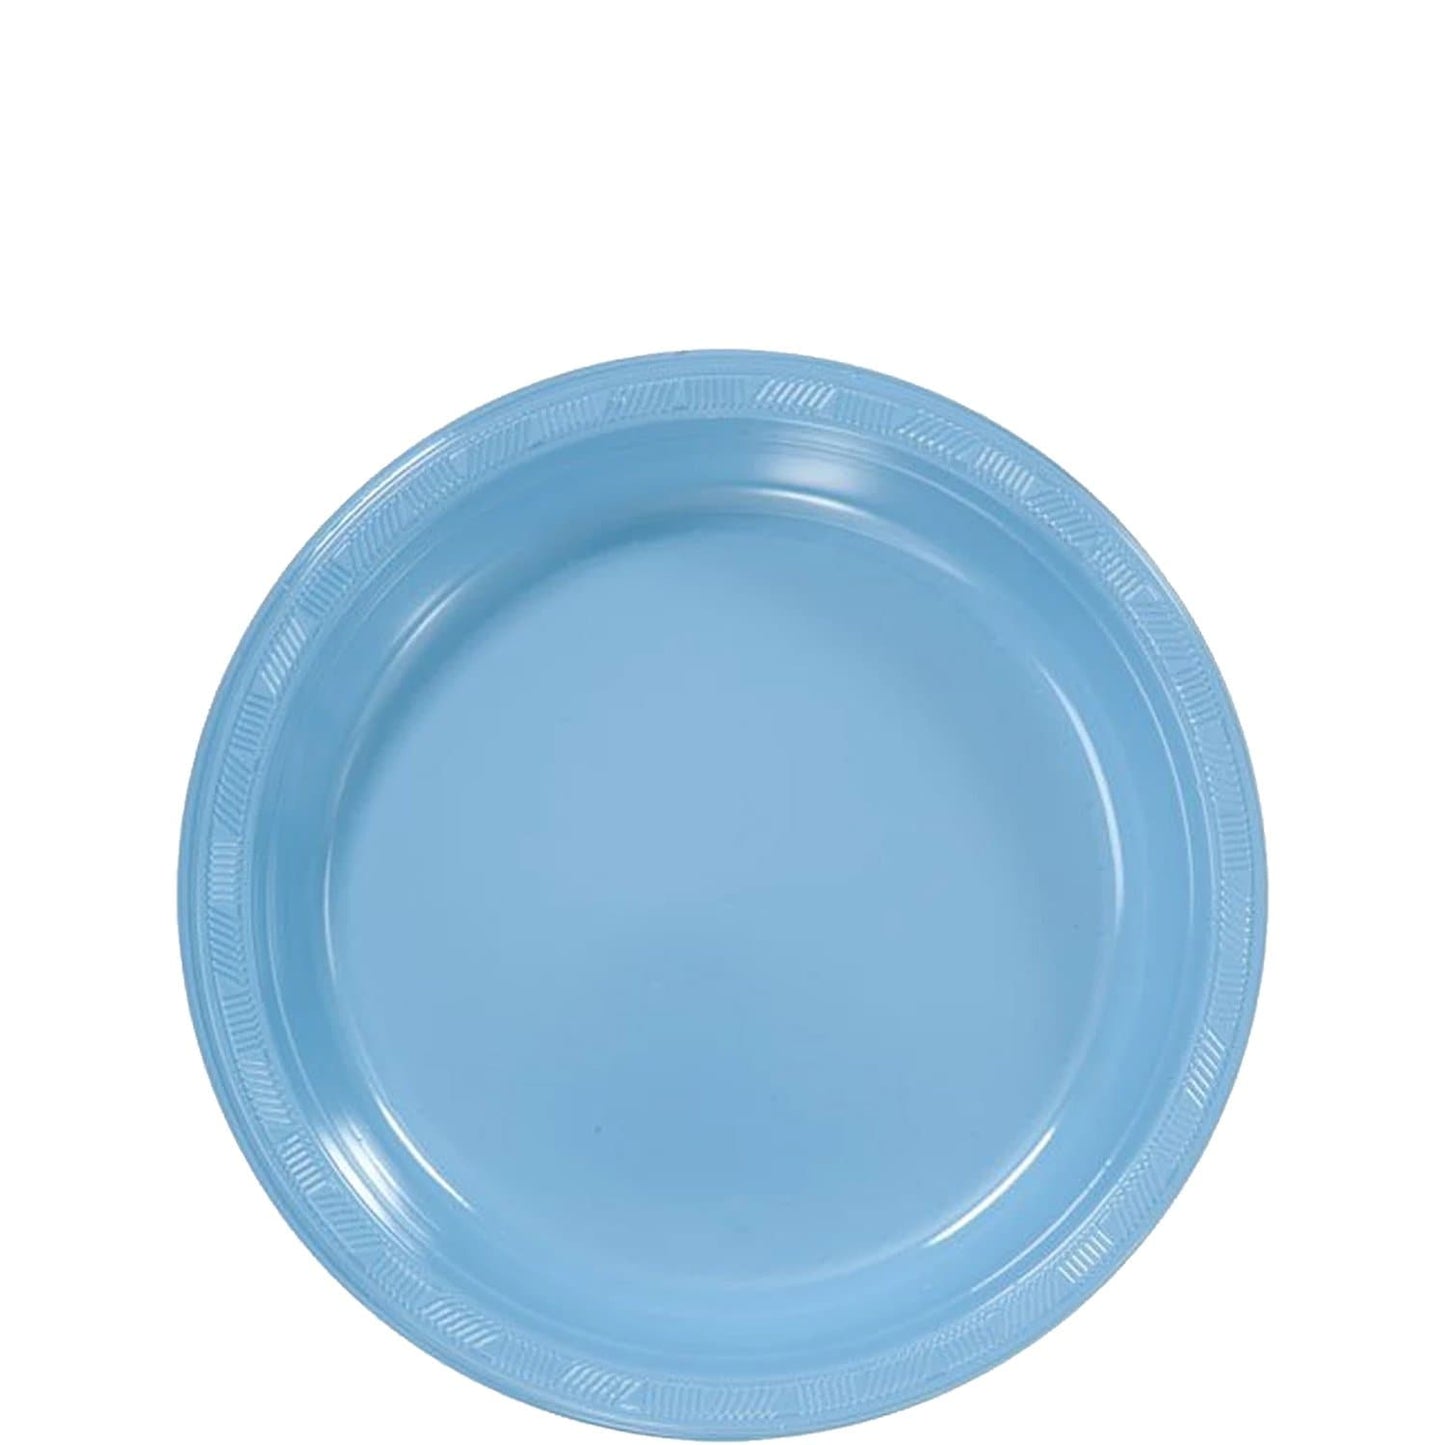 SALE Hanna K. Signature Plastic Plate Light Blue 7" 50 count  Hanna K Signature   